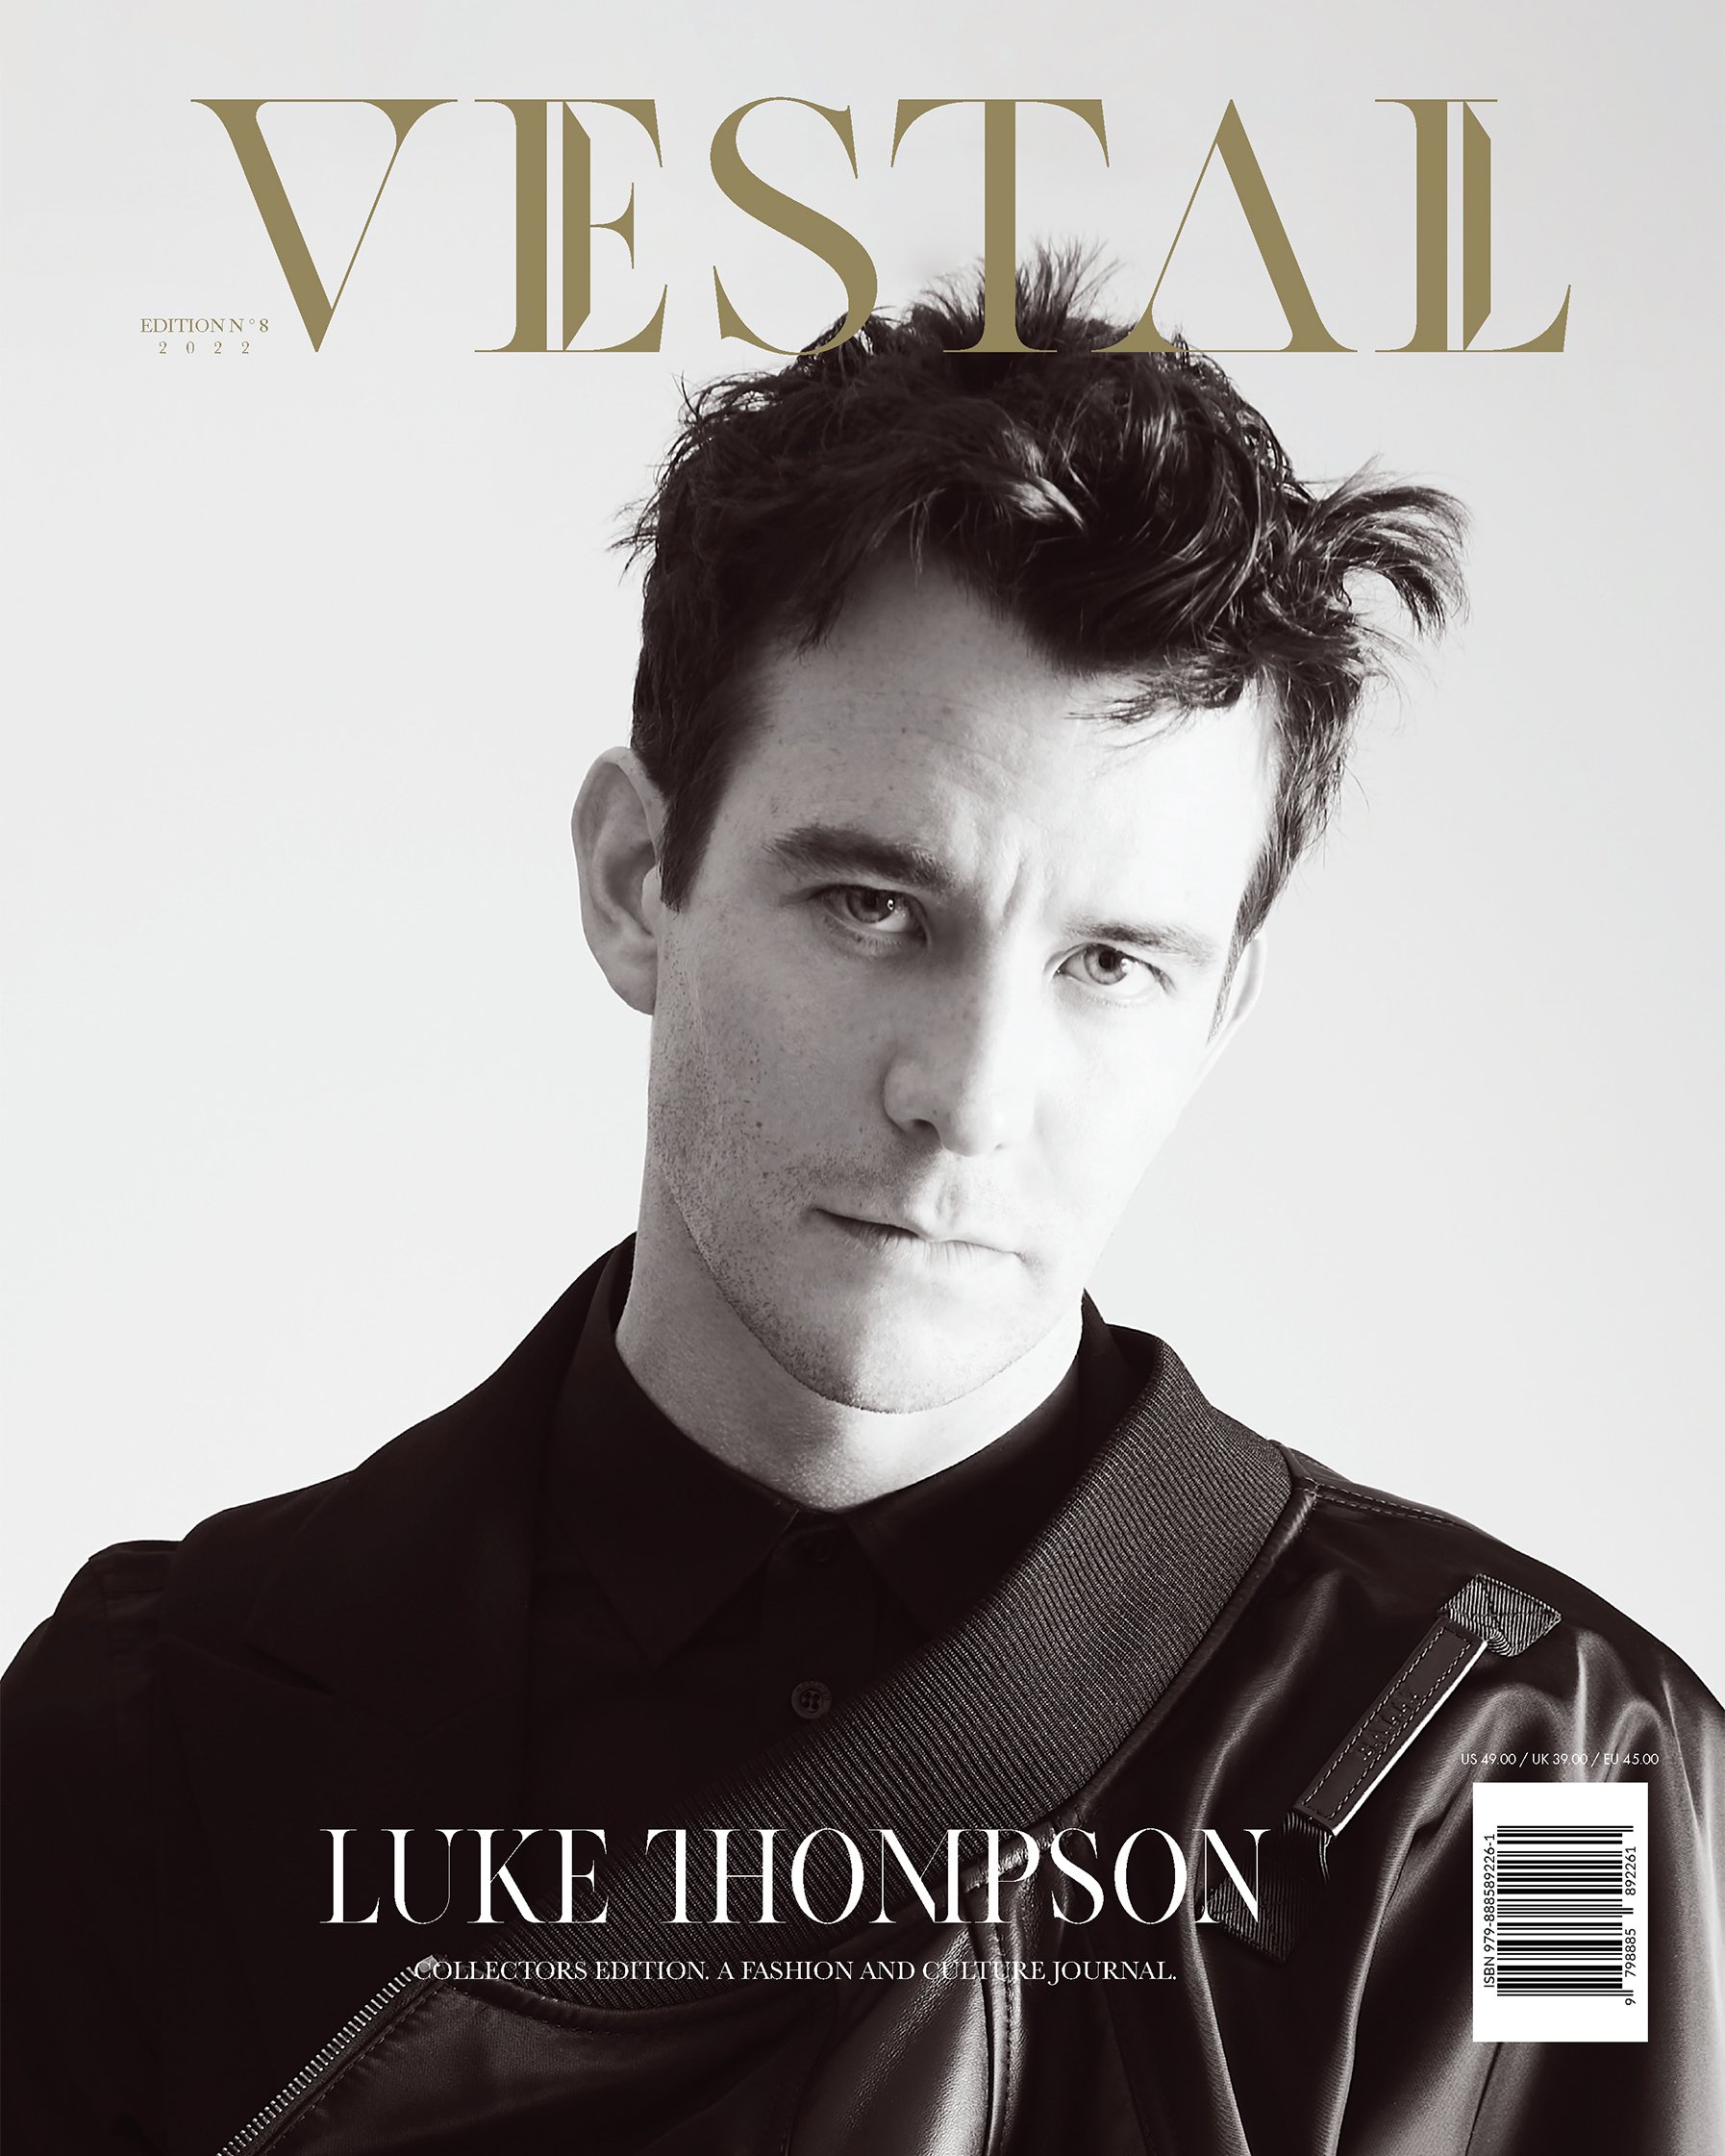 Vestal - Luke Thompson